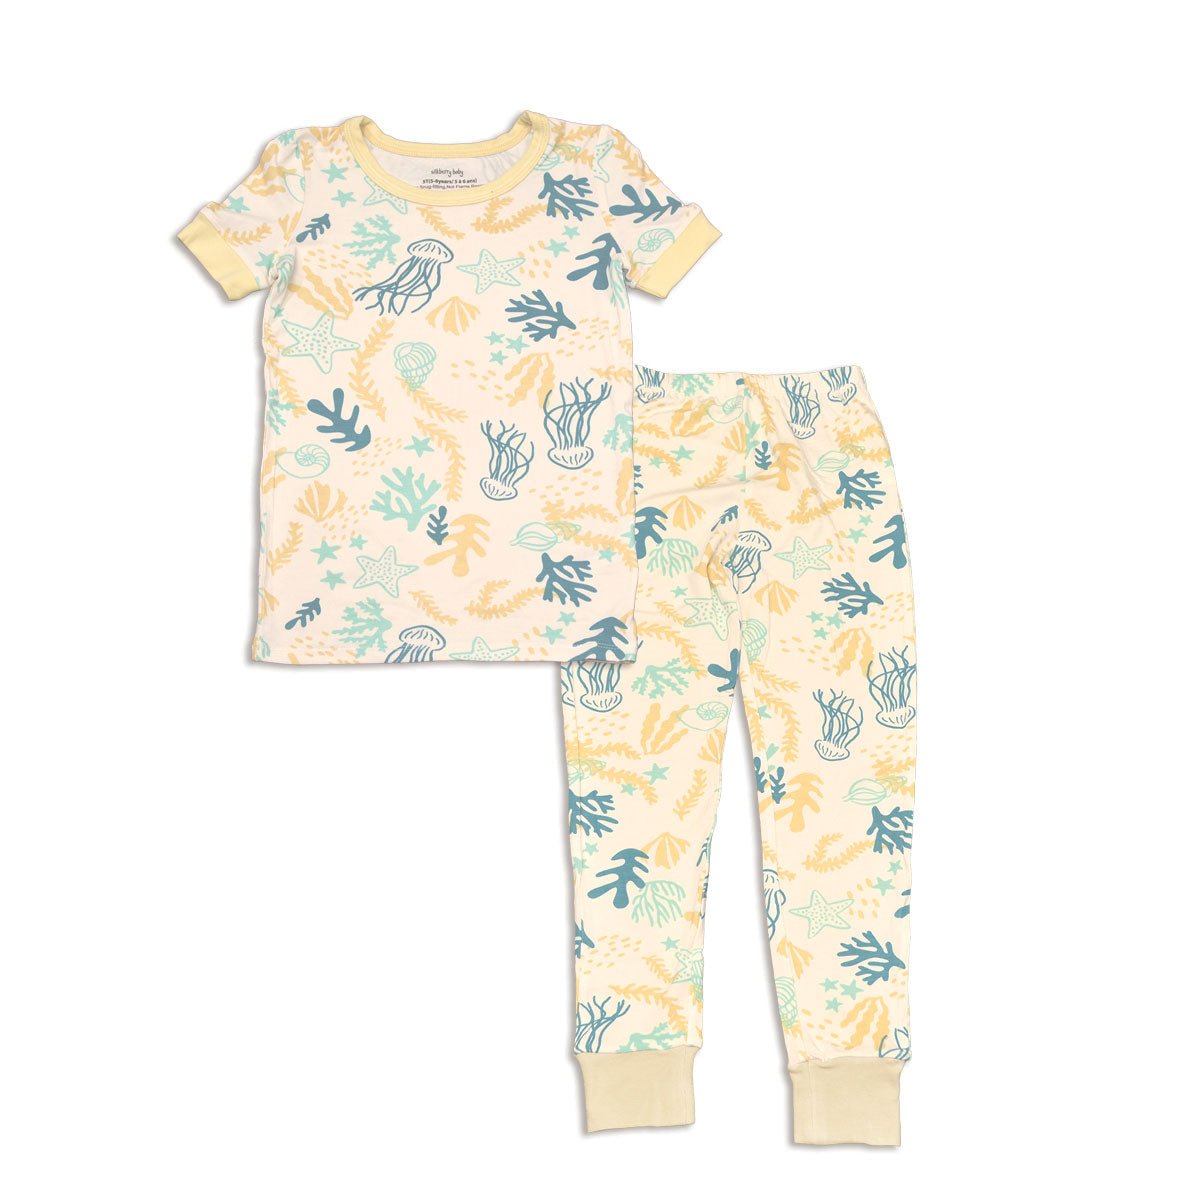 Boys Bamboo Short Sleeve Pajama Set (Reef Print) - Blissfully Lavender Boutiquehttps://silkberrybaby.com/